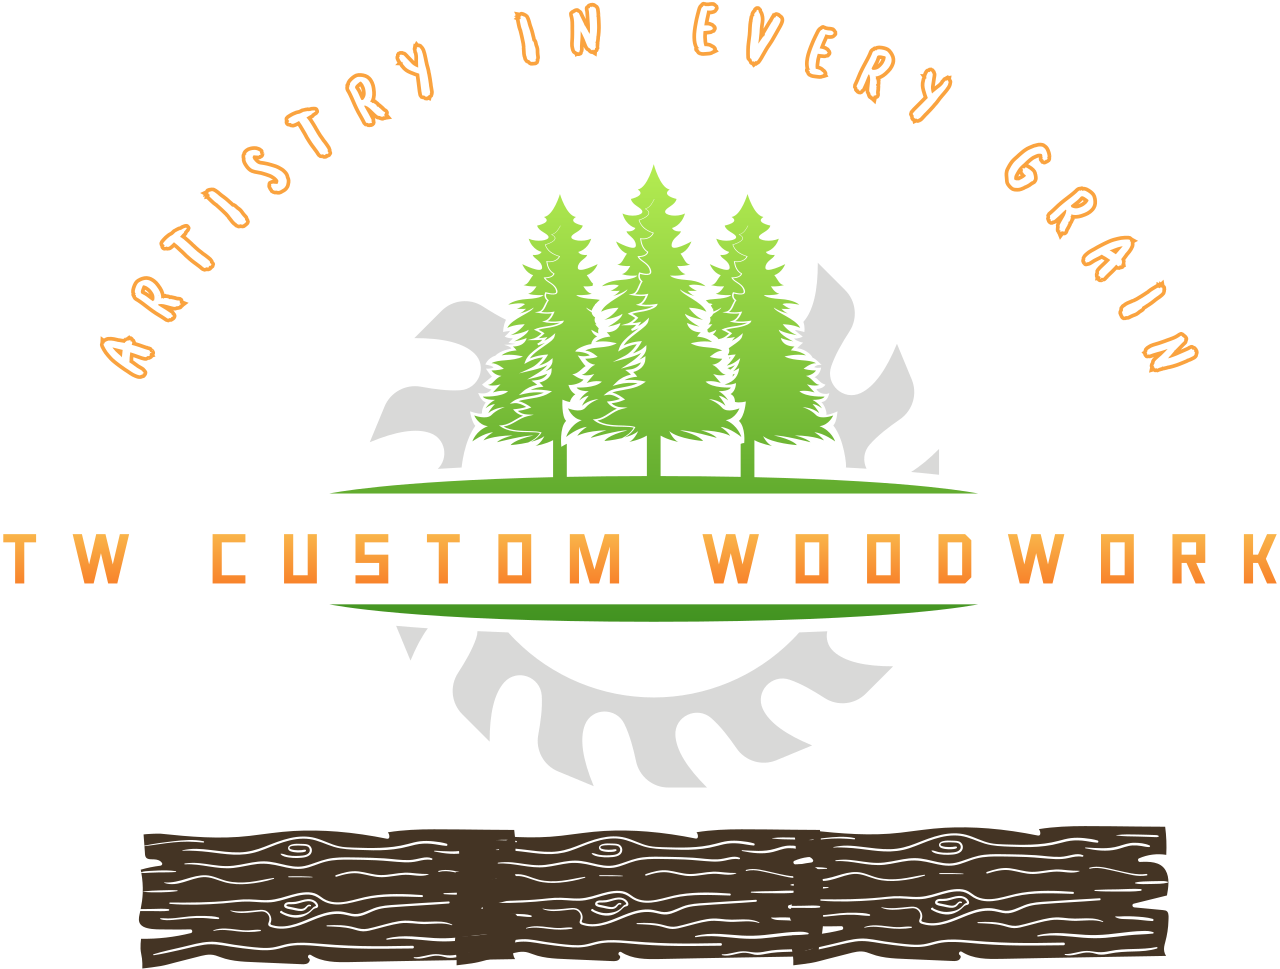 TW CUSTOM WOODWORK's logo